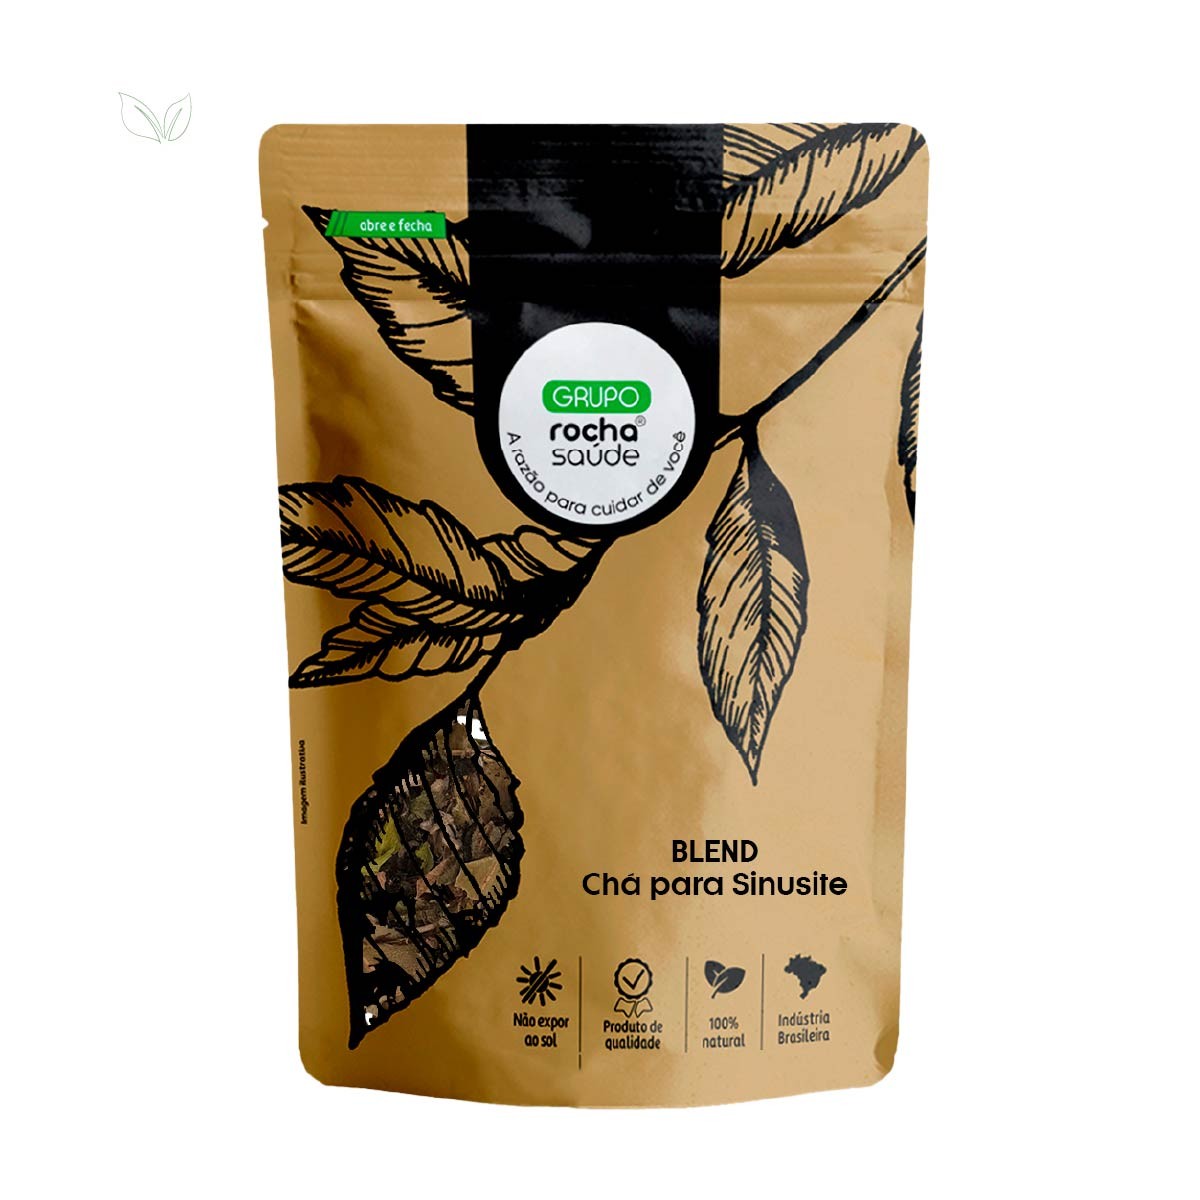 Blend - Chá para Sinusite - 100% Natural - Alta Qualidade